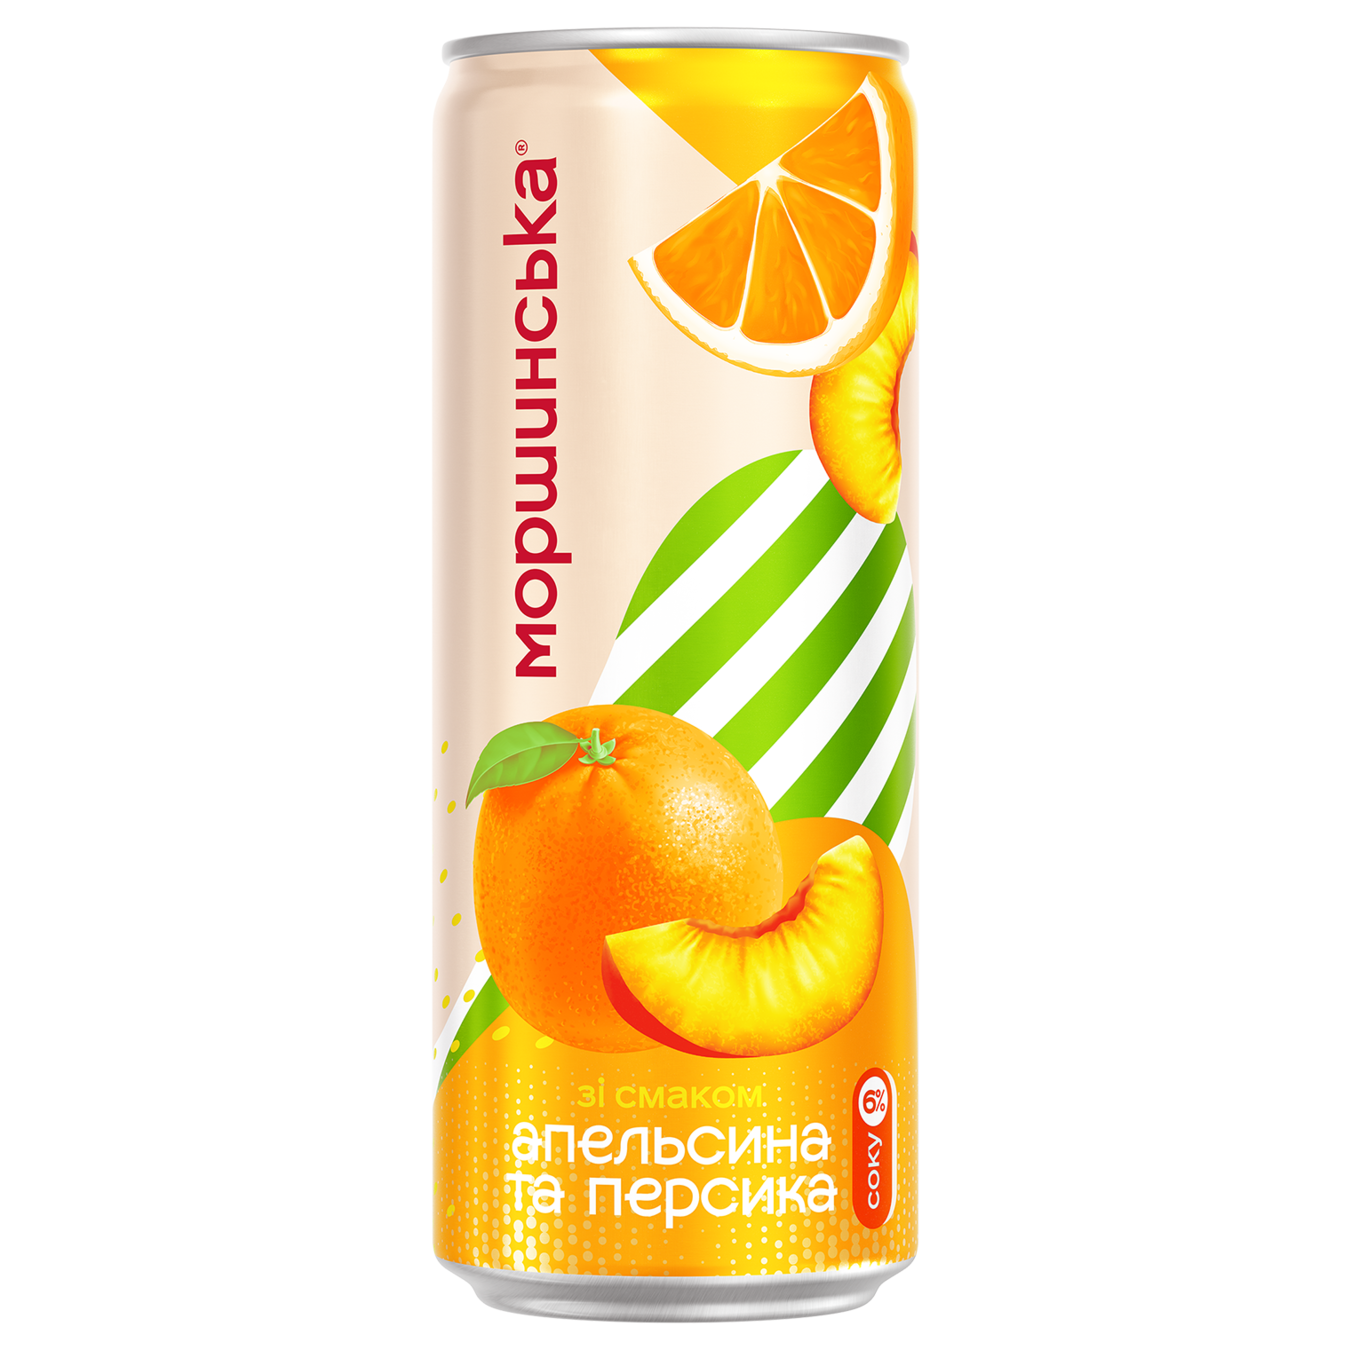 Carbonated drink Morshynska orange-peach lemonade 0.33 l iron can 3